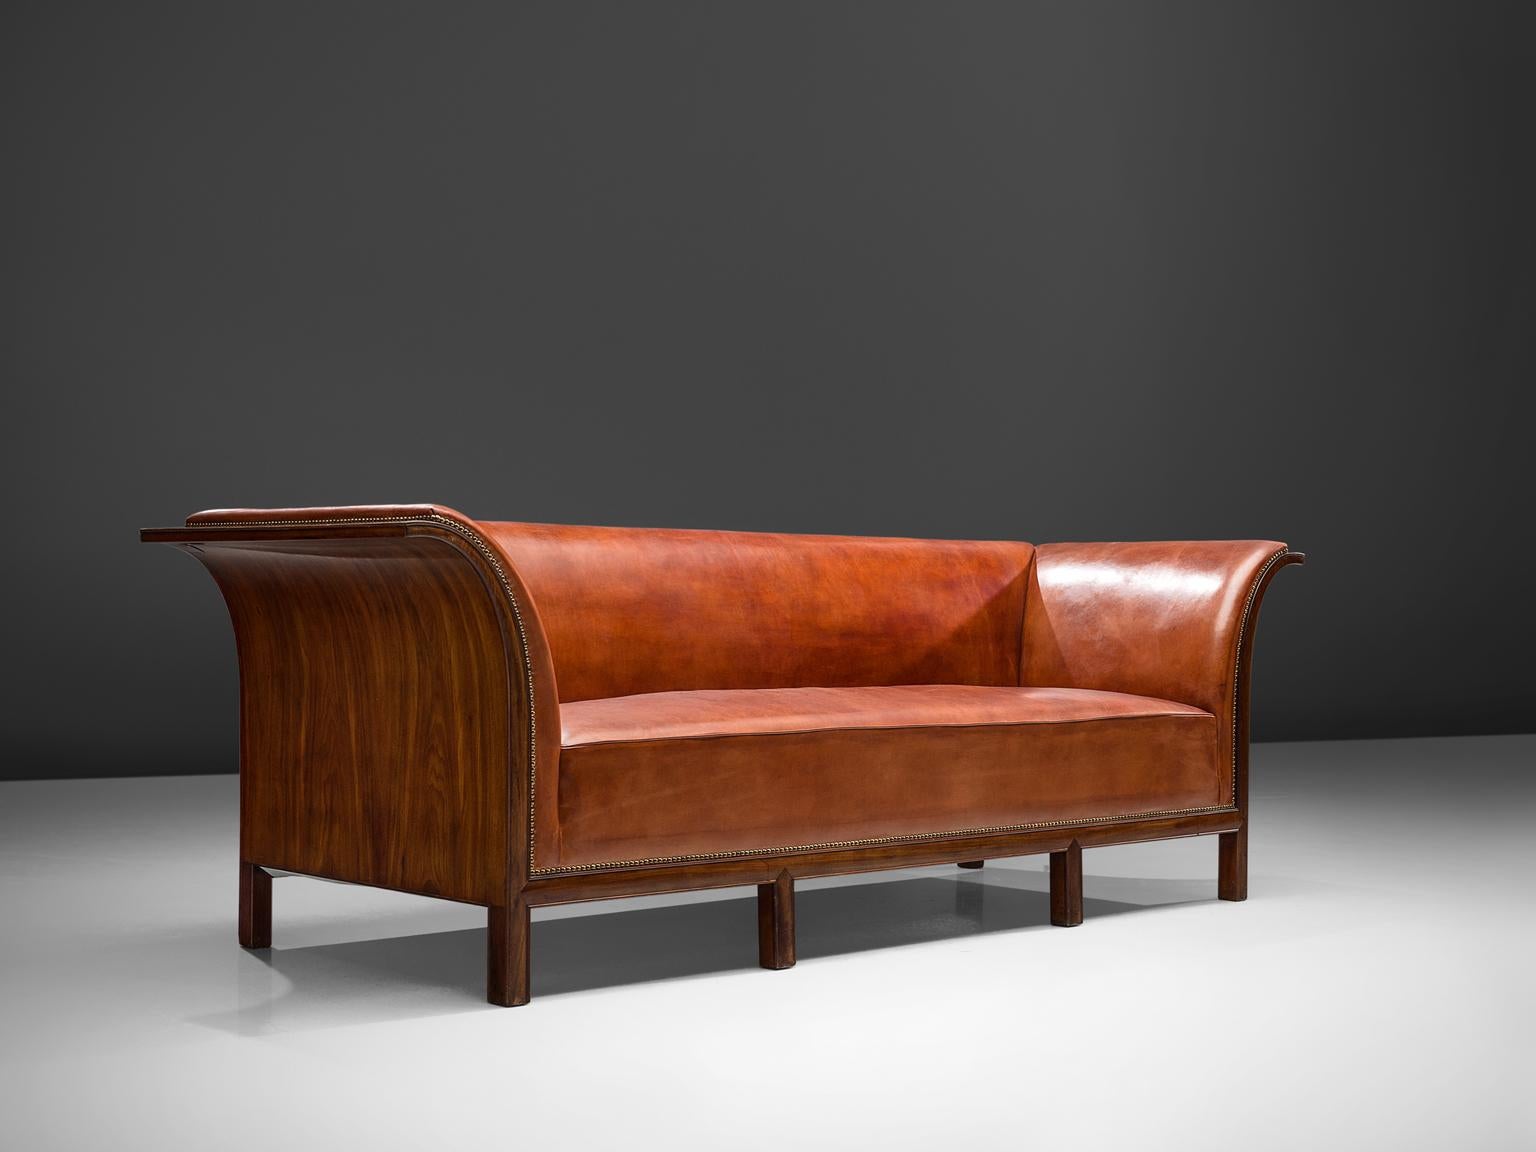 Scandinavian Modern Frits Henningsen Sofa in Mahogany and Cognac Leather, circa 1930